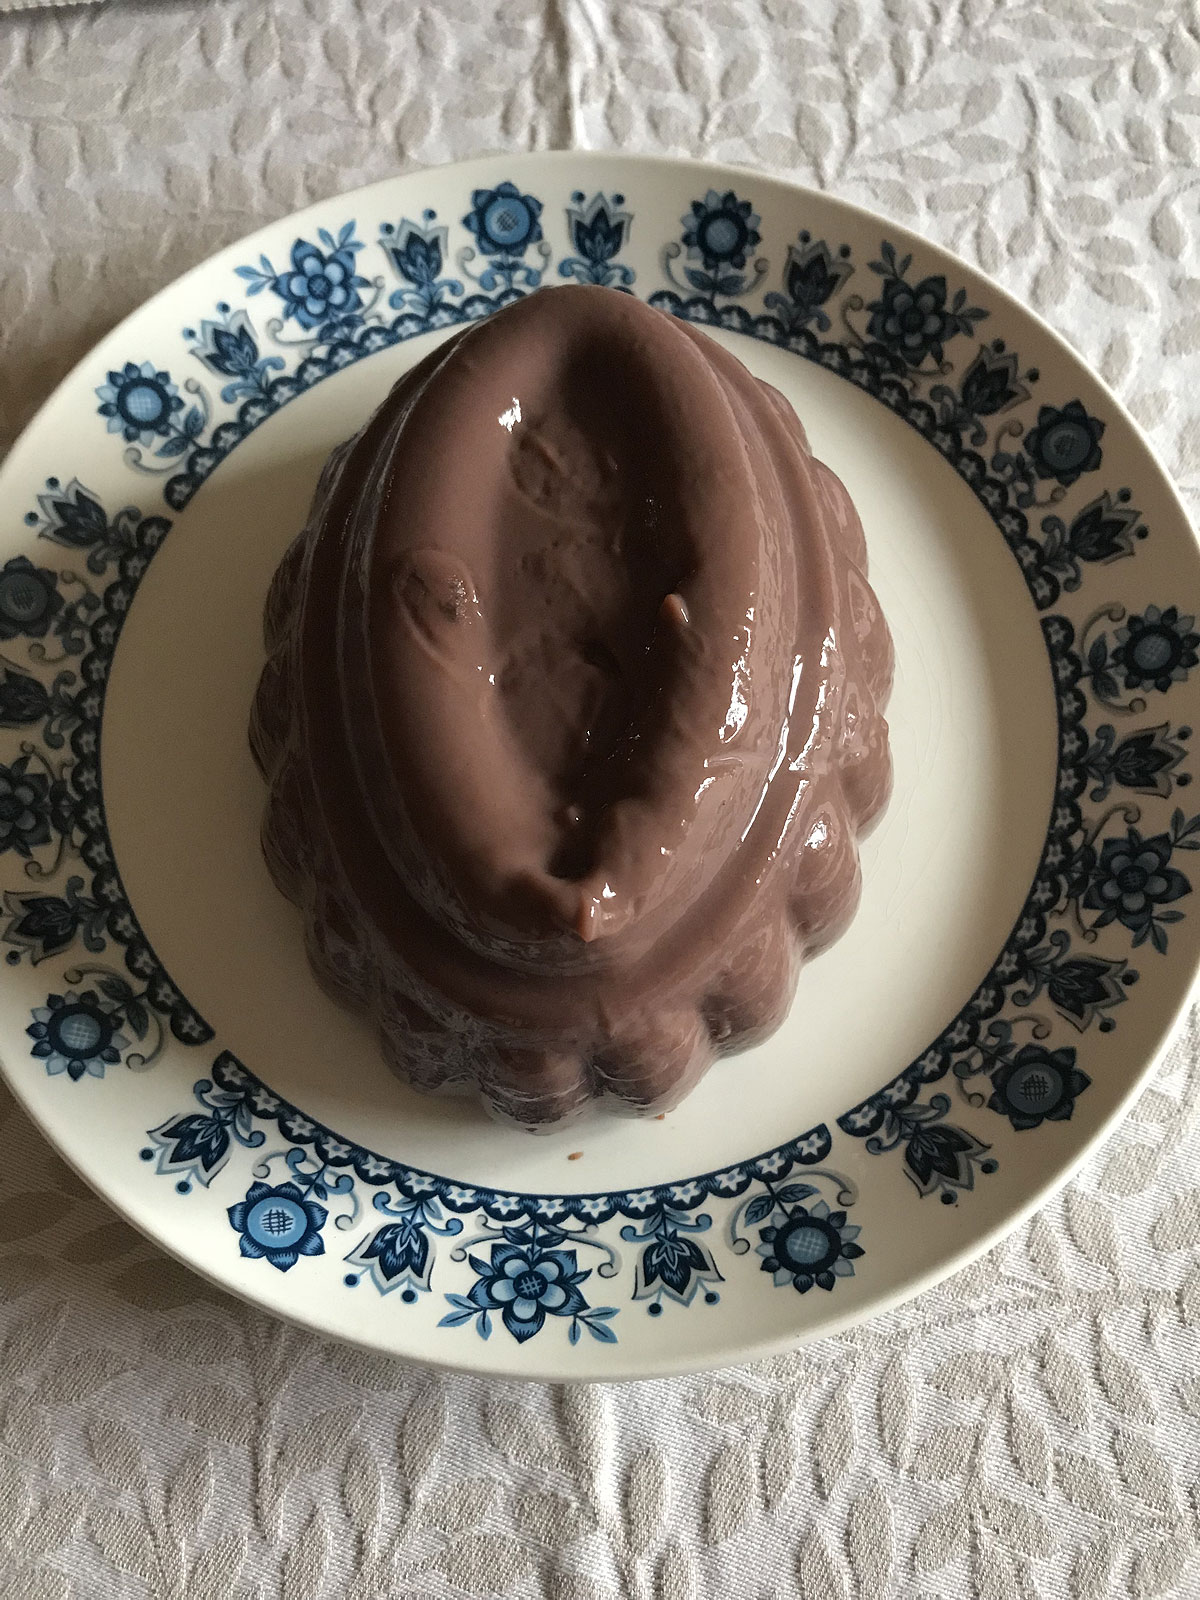 Chocolate Blancmange